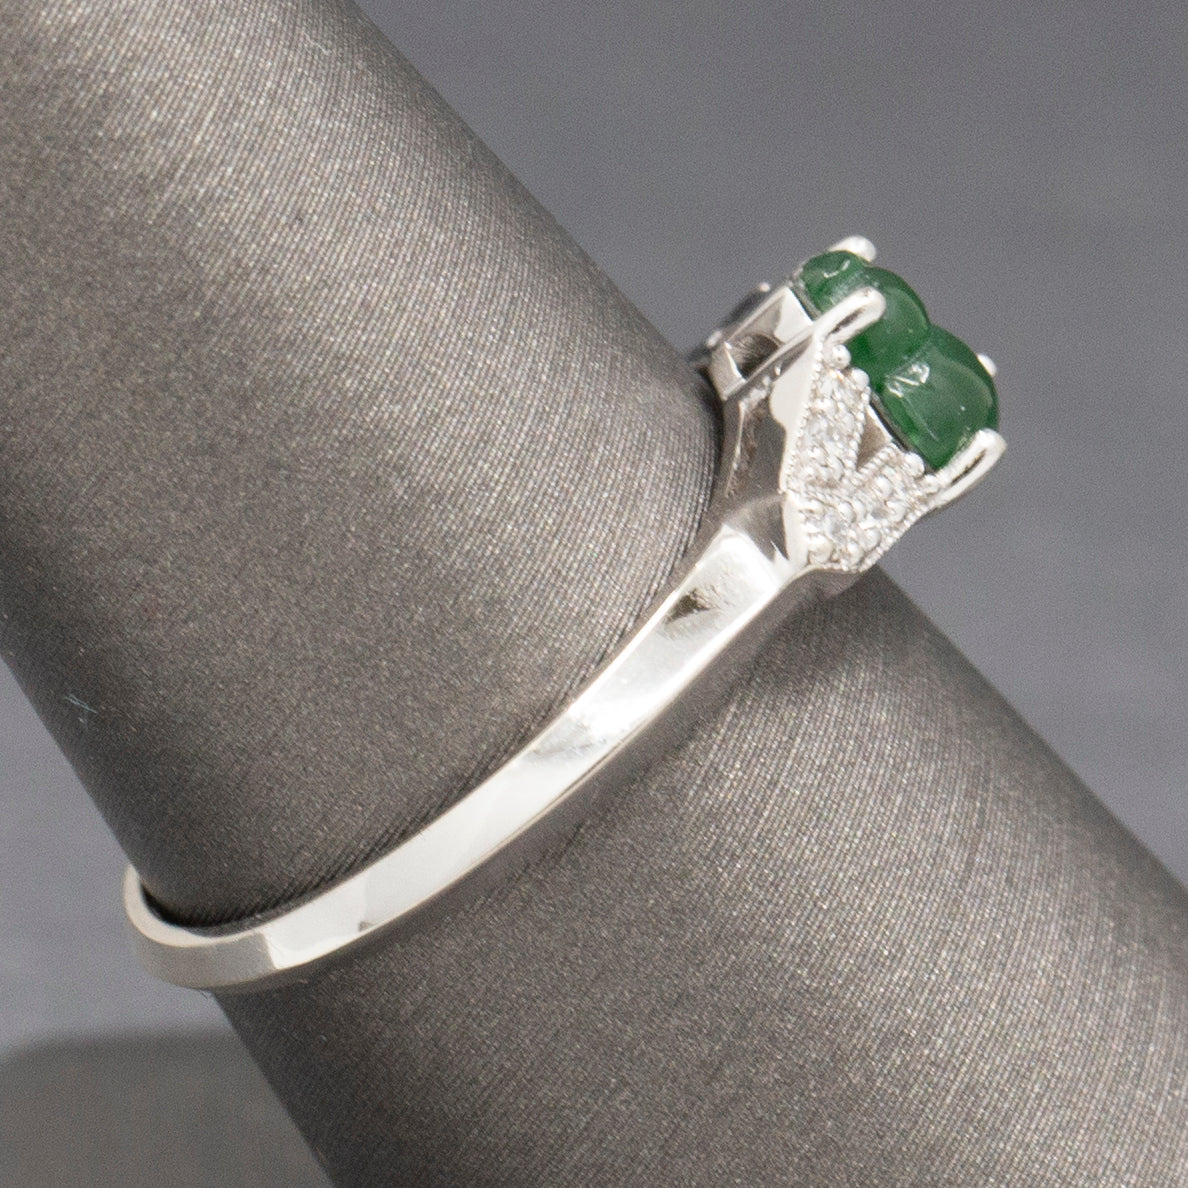 Vintage Type A Jadeite Jade and Diamond Petite Ring in 14k White Gold